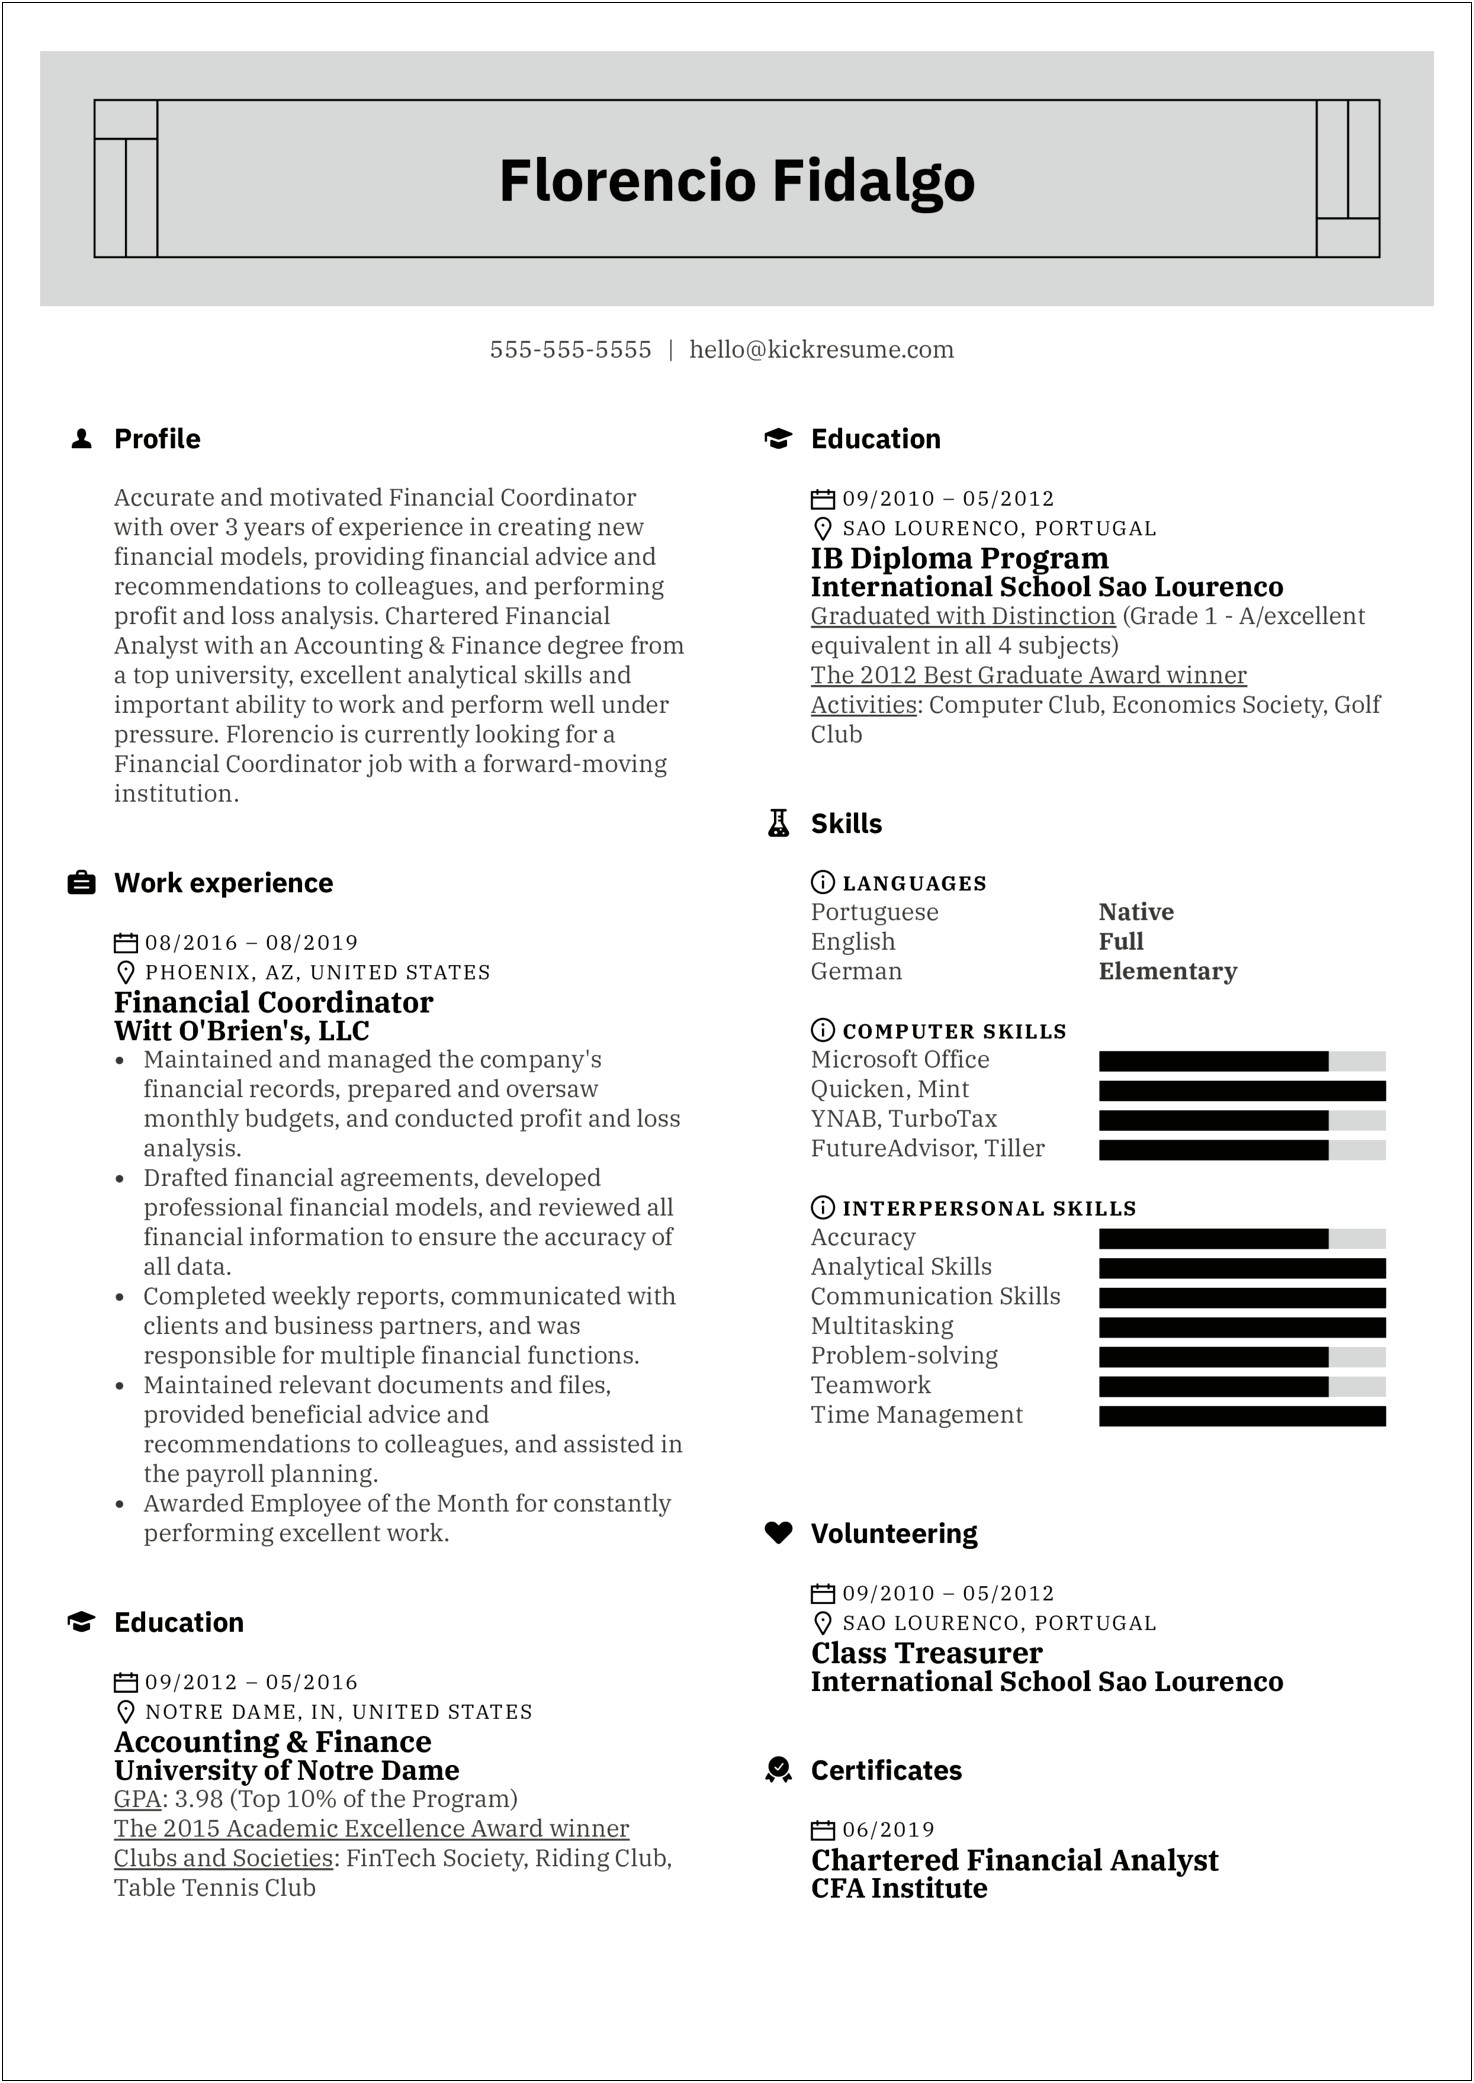 Job Description For Education Coordinator Resume